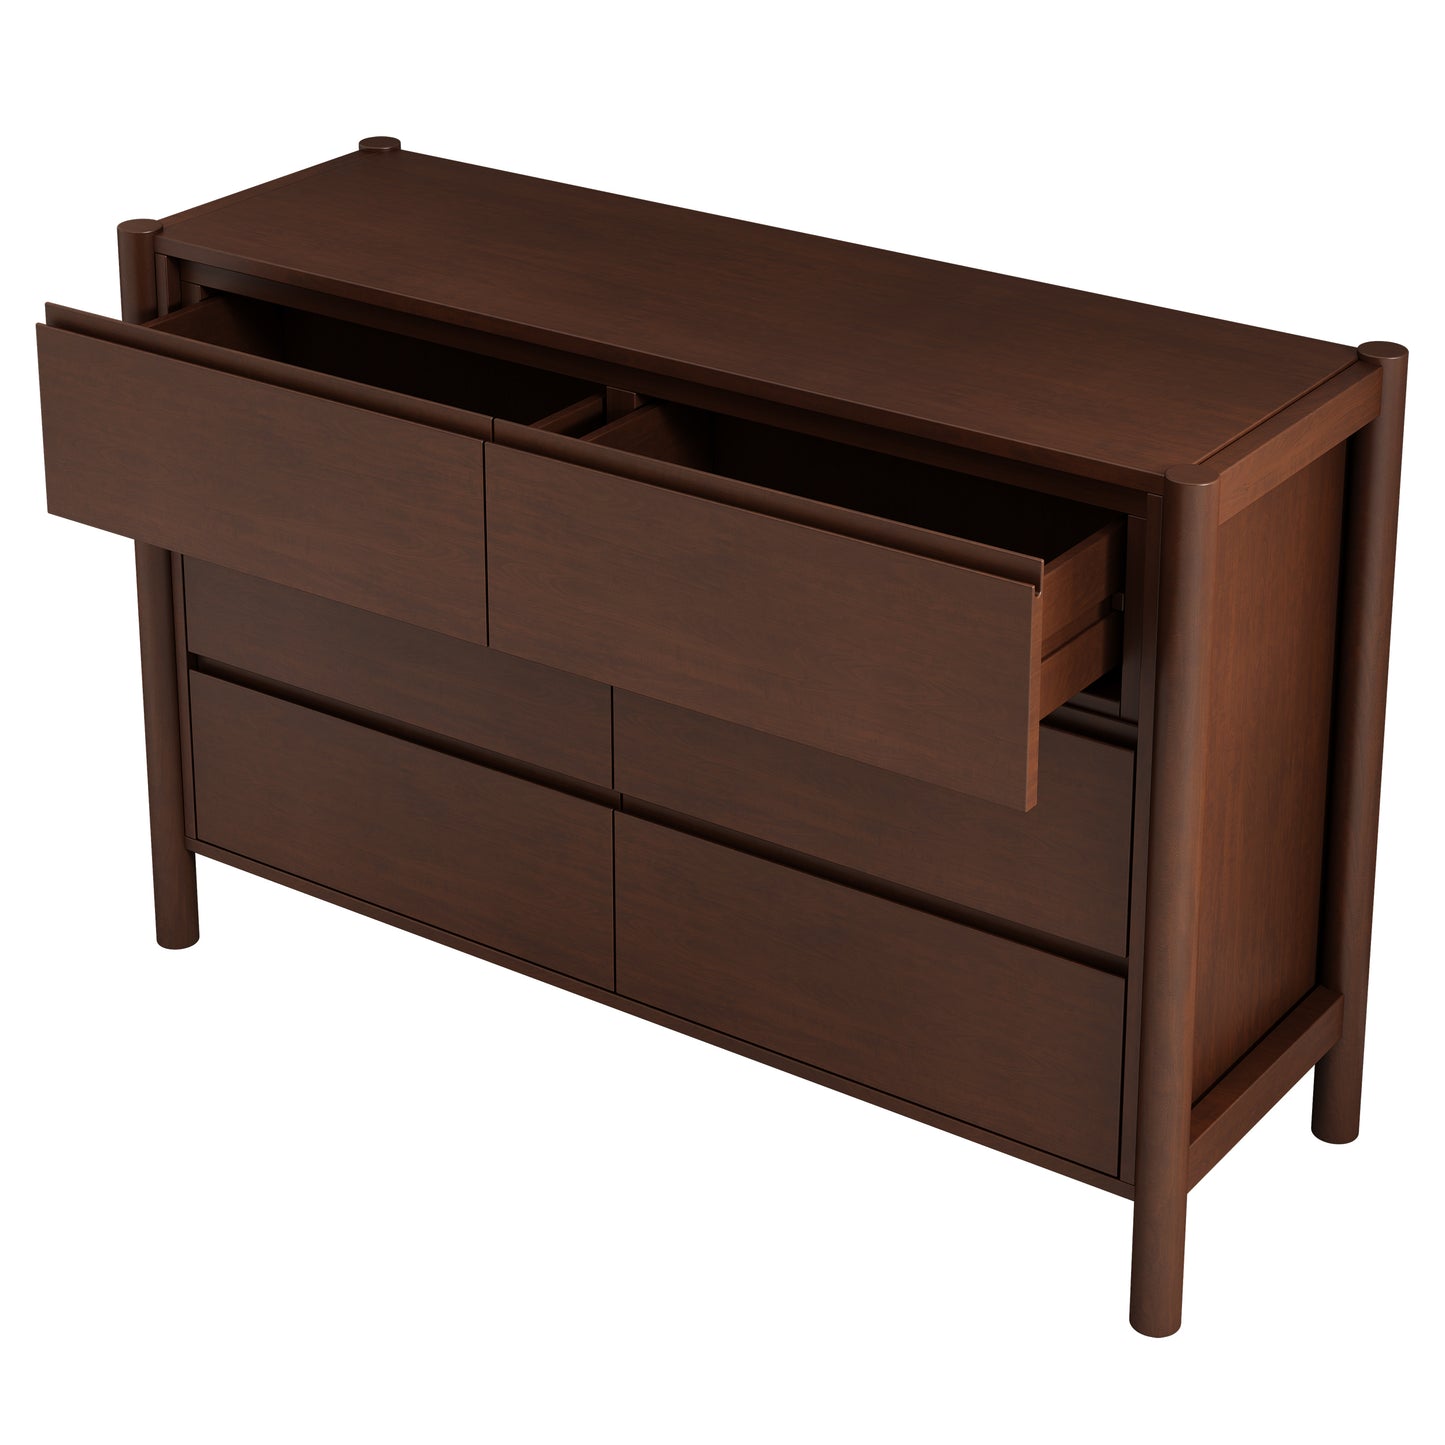 Mid Century Modern Wood 6-Drawer Dresser Storage Cabinet for Bedroom, Living Room, Rich Walnut